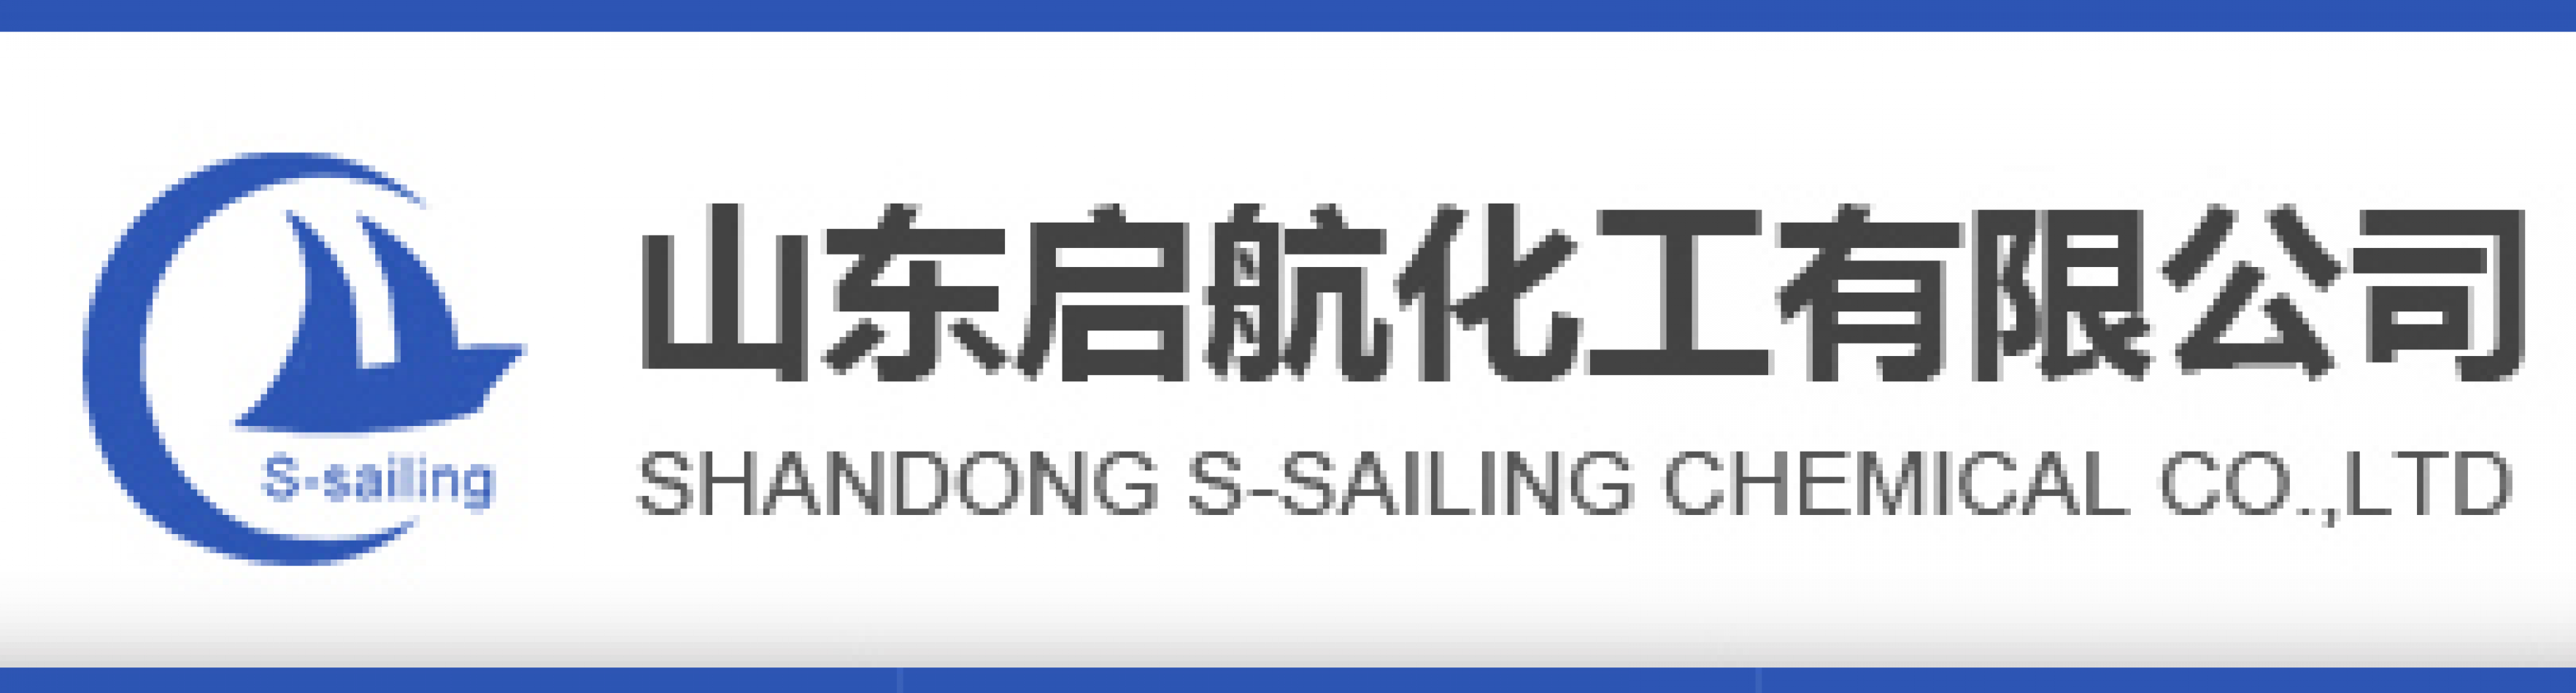 Shandong S-sailing chemical co.,ltd